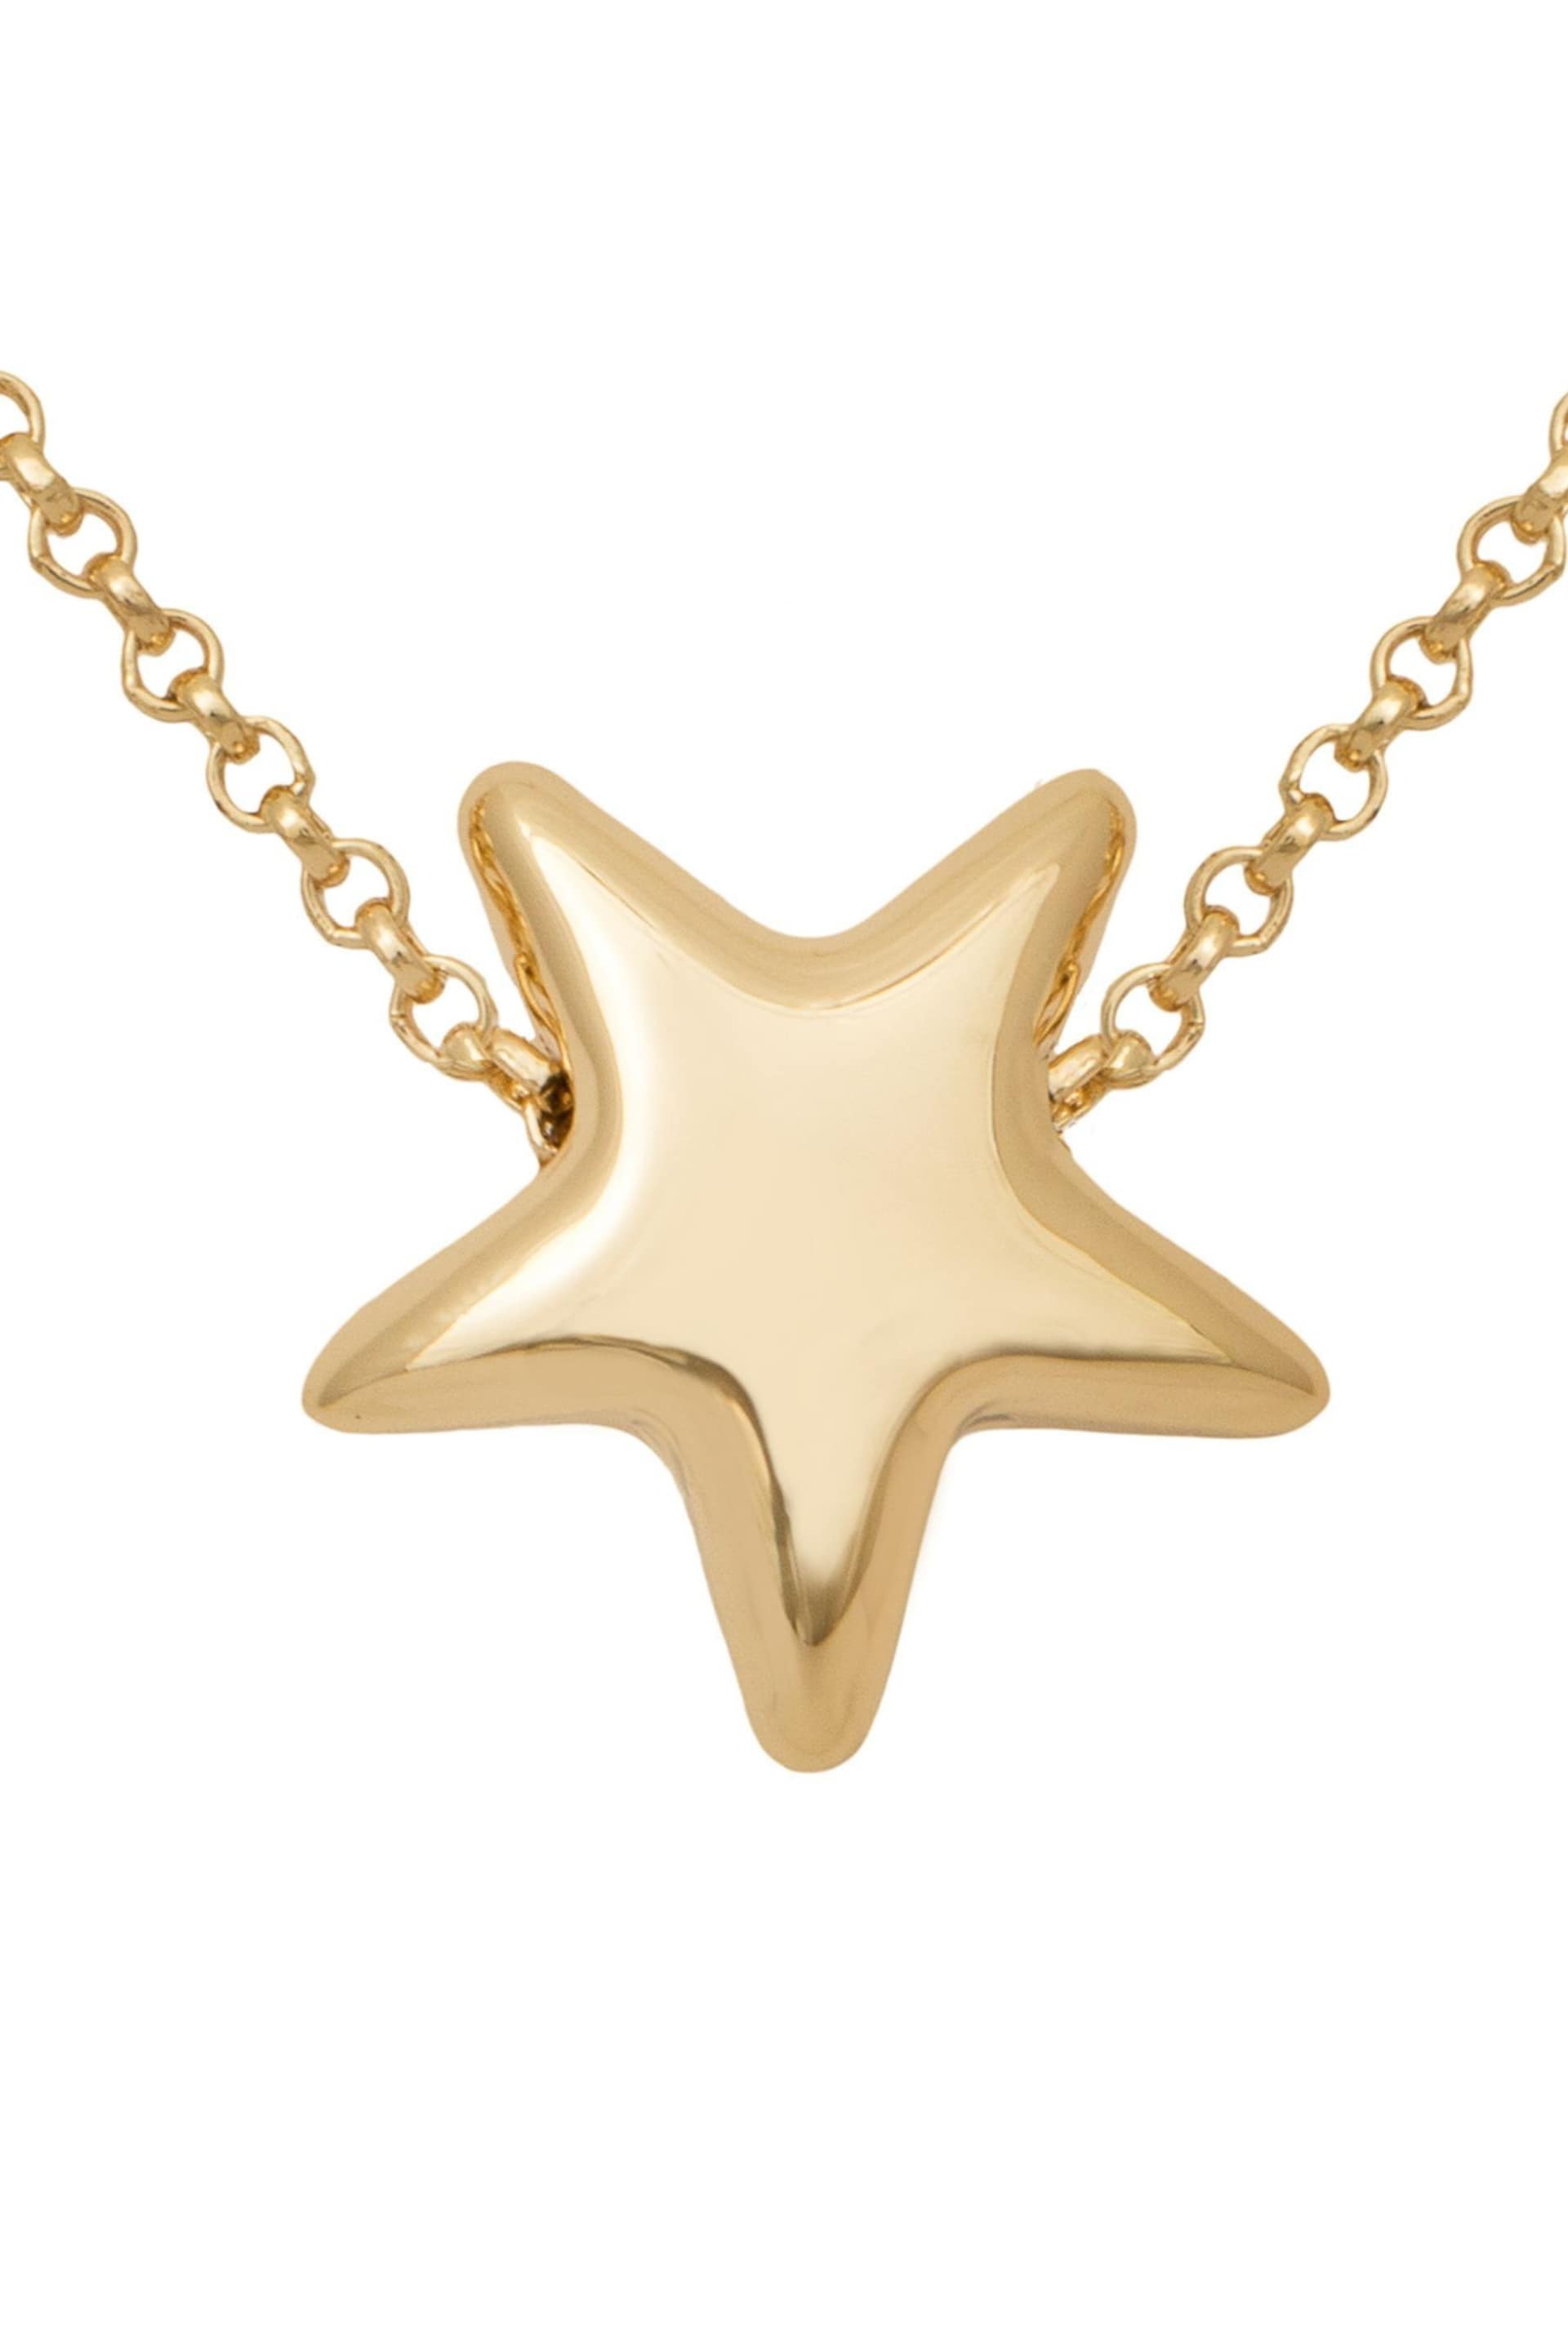 Caramel Jewellery London Gold Tone Star Choker Necklace - Image 3 of 5